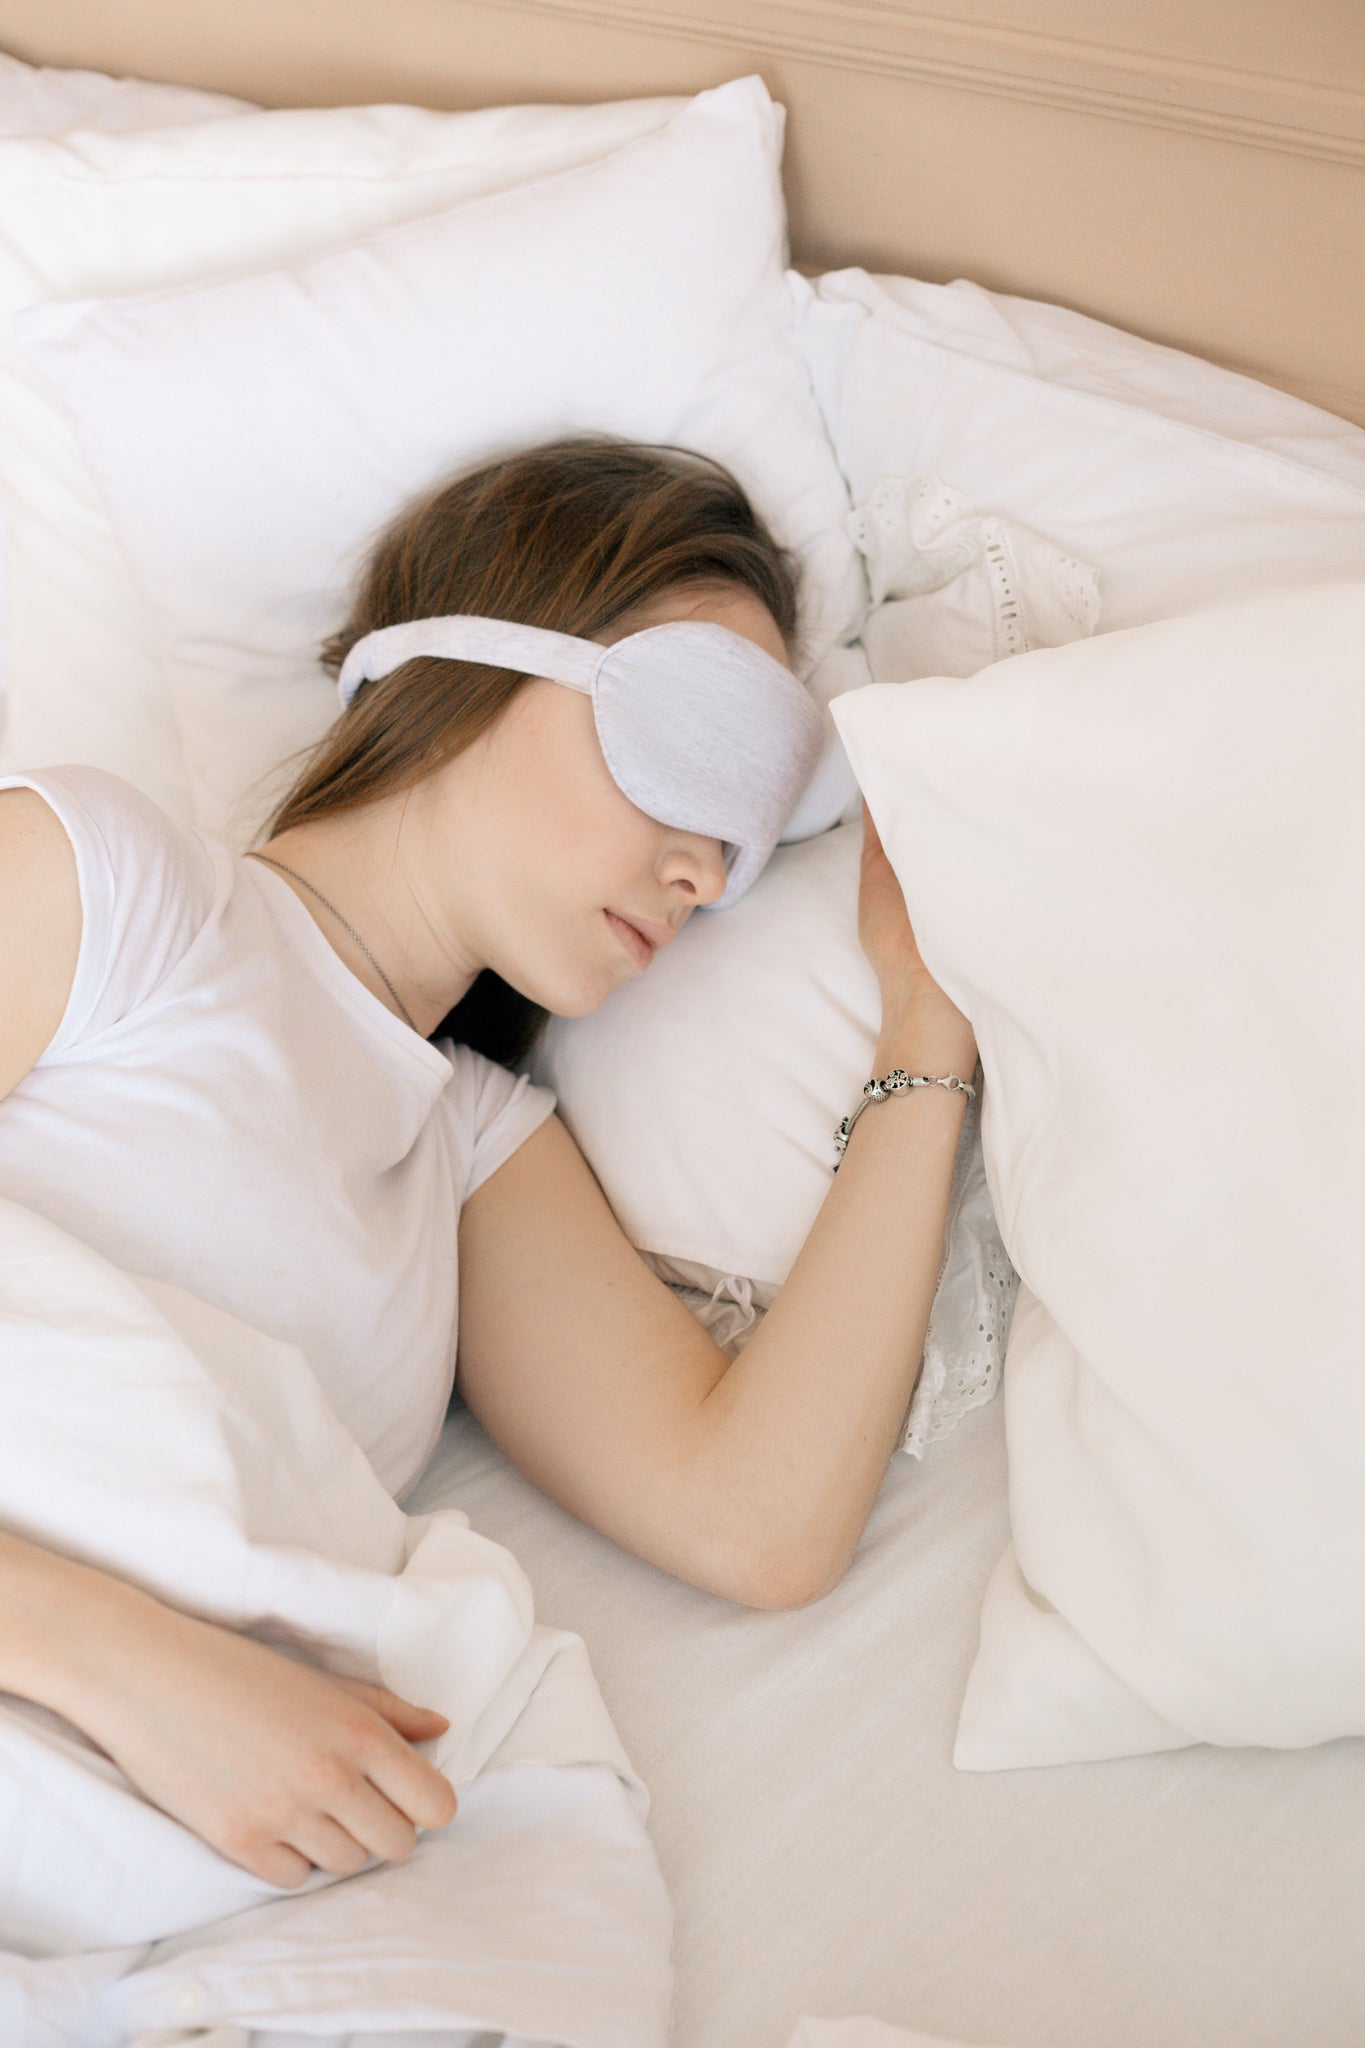 How to maximize your beauty sleep